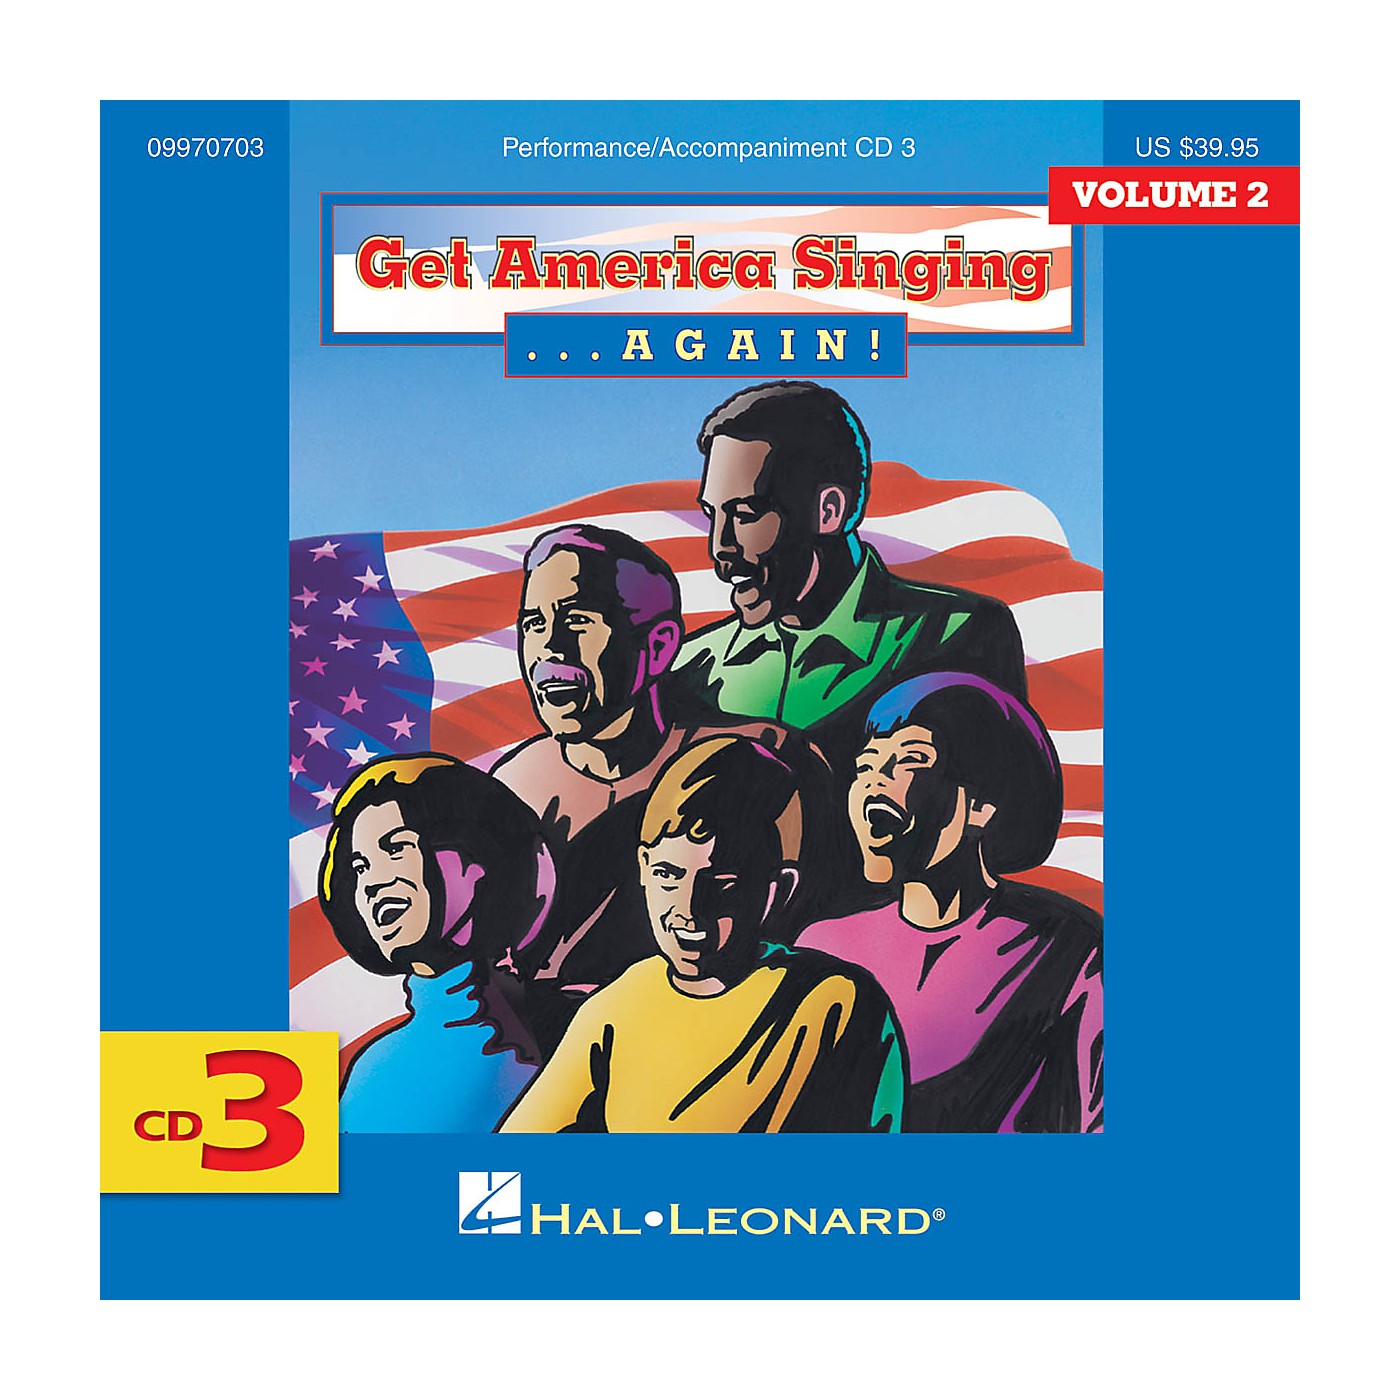 Hal Leonard Get America Singing Again Vol 2 CD Three VOL 2 CD 3 thumbnail